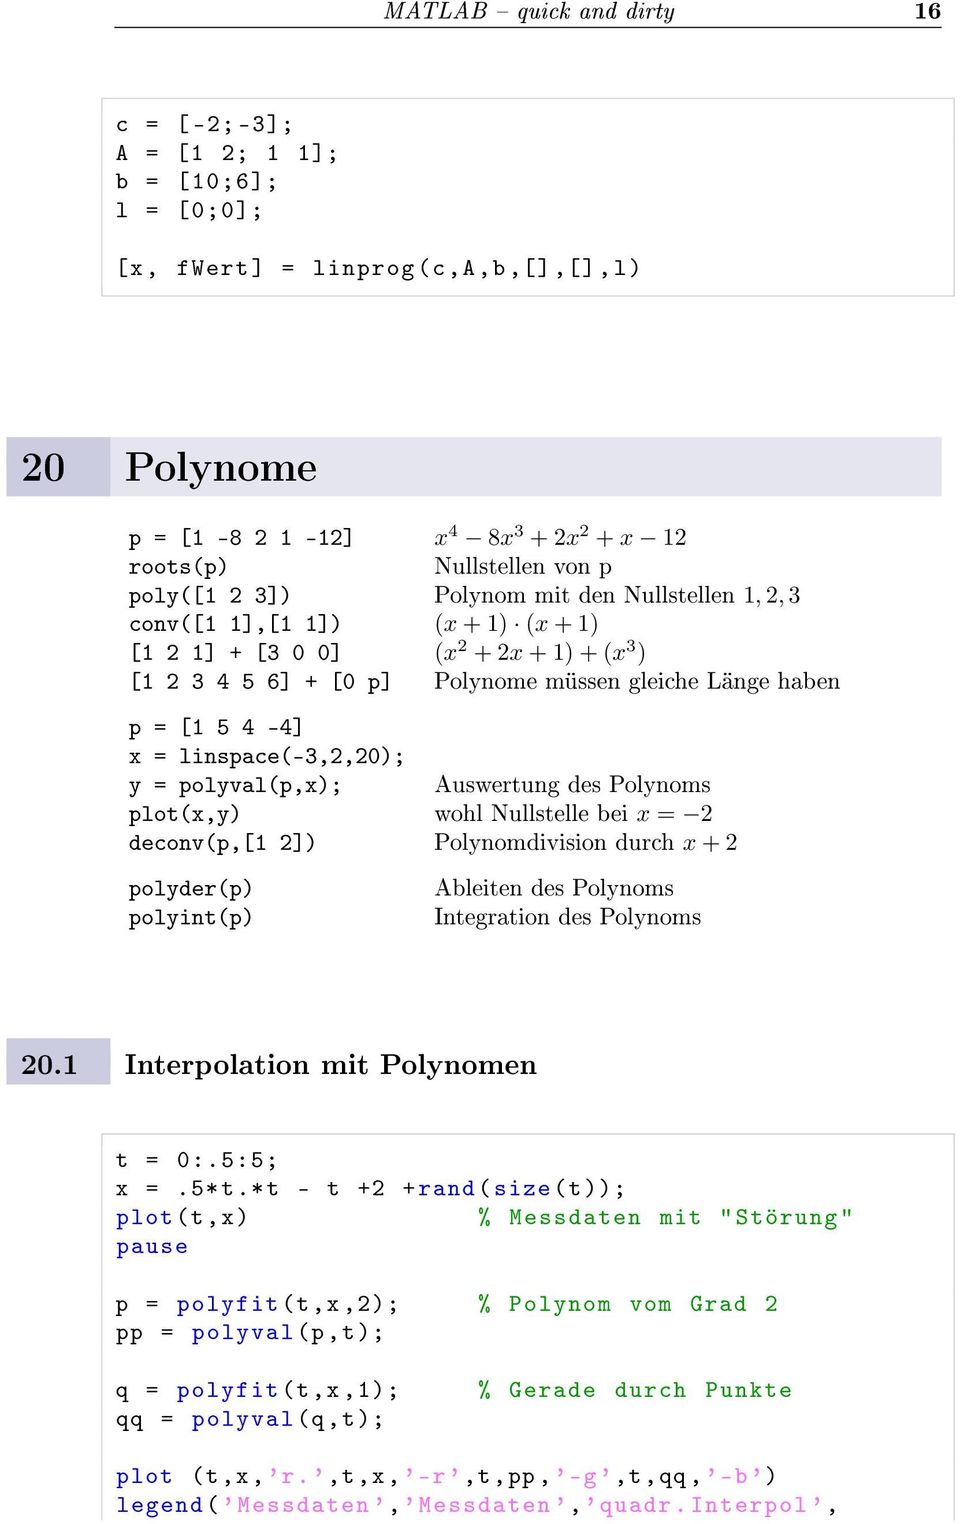 = linspace(-3,2,20); y = polyval(p,x); Auswertung des Polynoms plot(x,y) wohl Nullstelle bei x = 2 deconv(p,[1 2]) Polynomdivision durch x + 2 polyder(p) polyint(p) Ableiten des Polynoms Integration